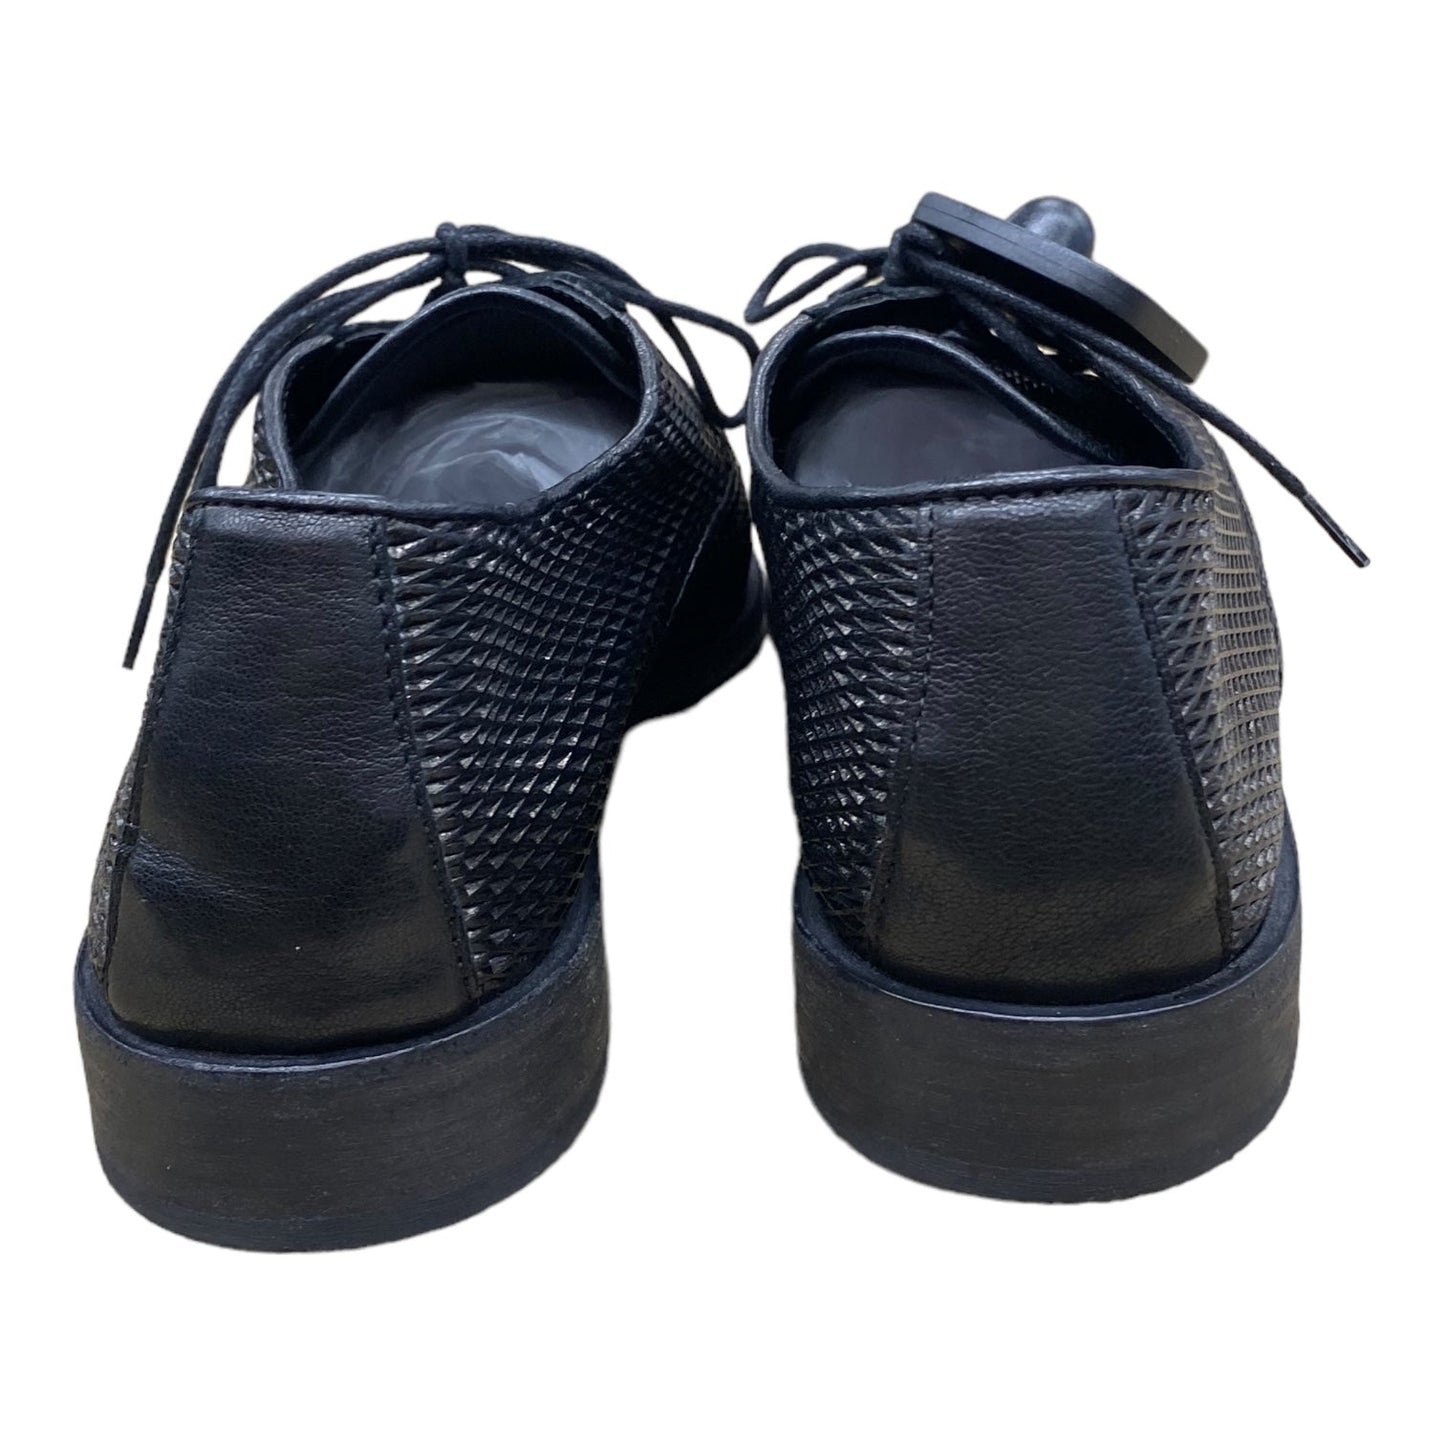 Shoes Flats By Sesto Meucci  Size: 8.5